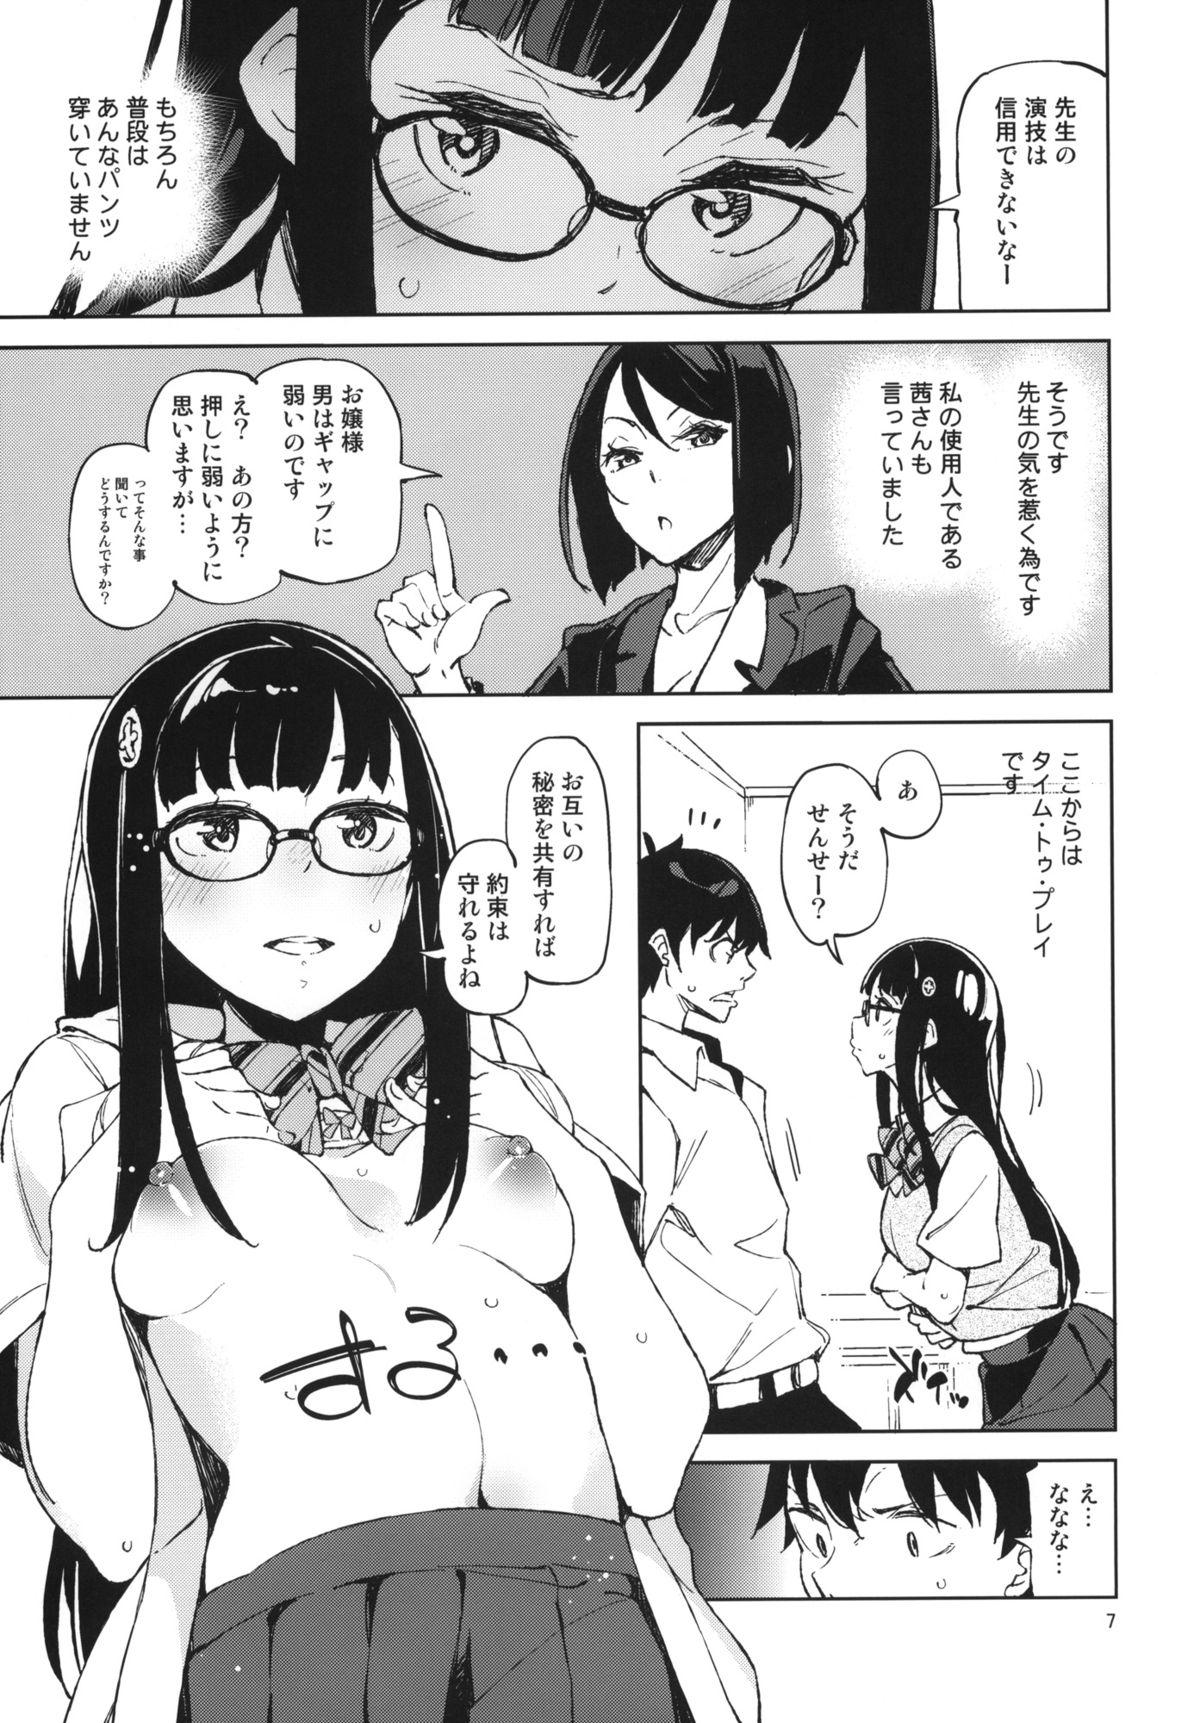 From Pony - Danshi koukousei de urekko light novel sakka o shiteiru keredo Roludo - Page 6